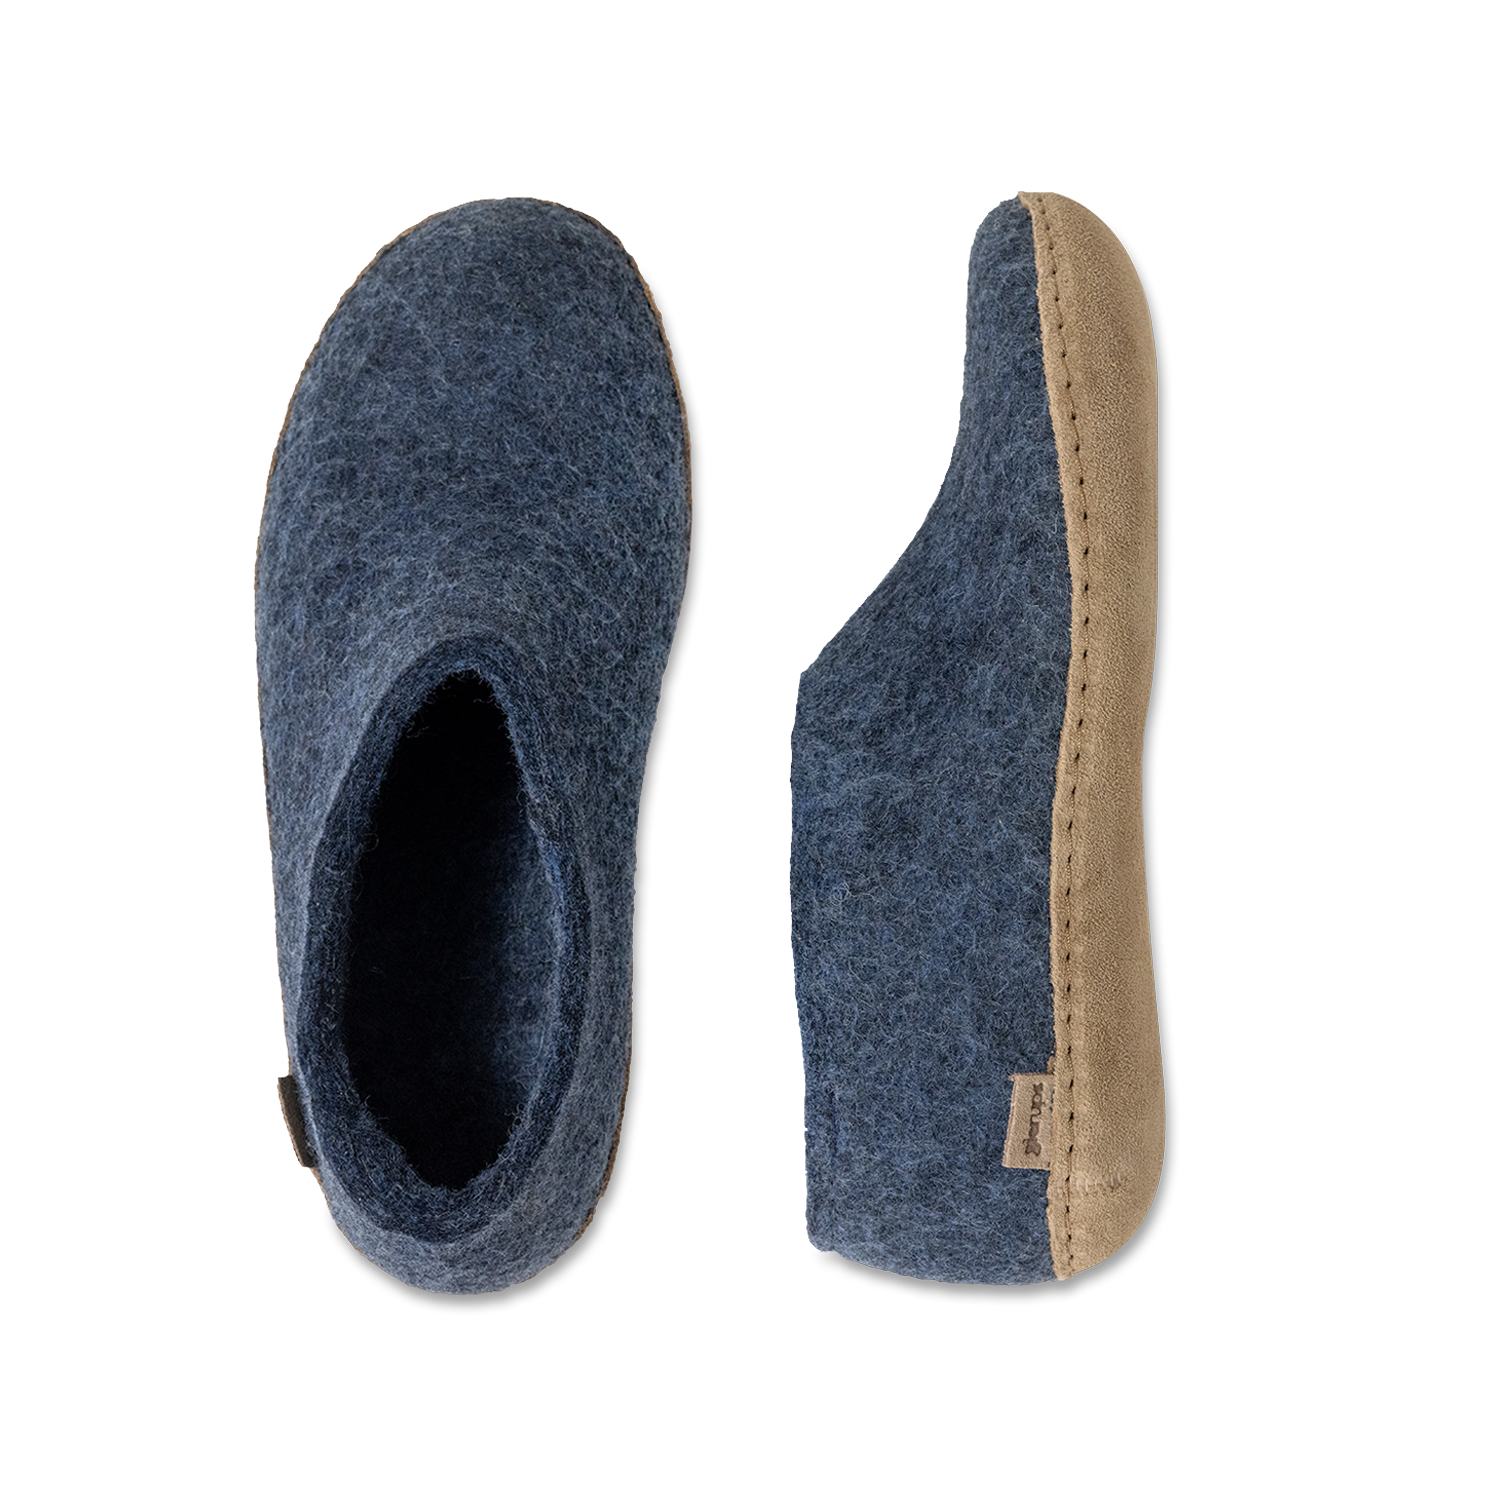 Glerups Shoe Denim - Leather Sole